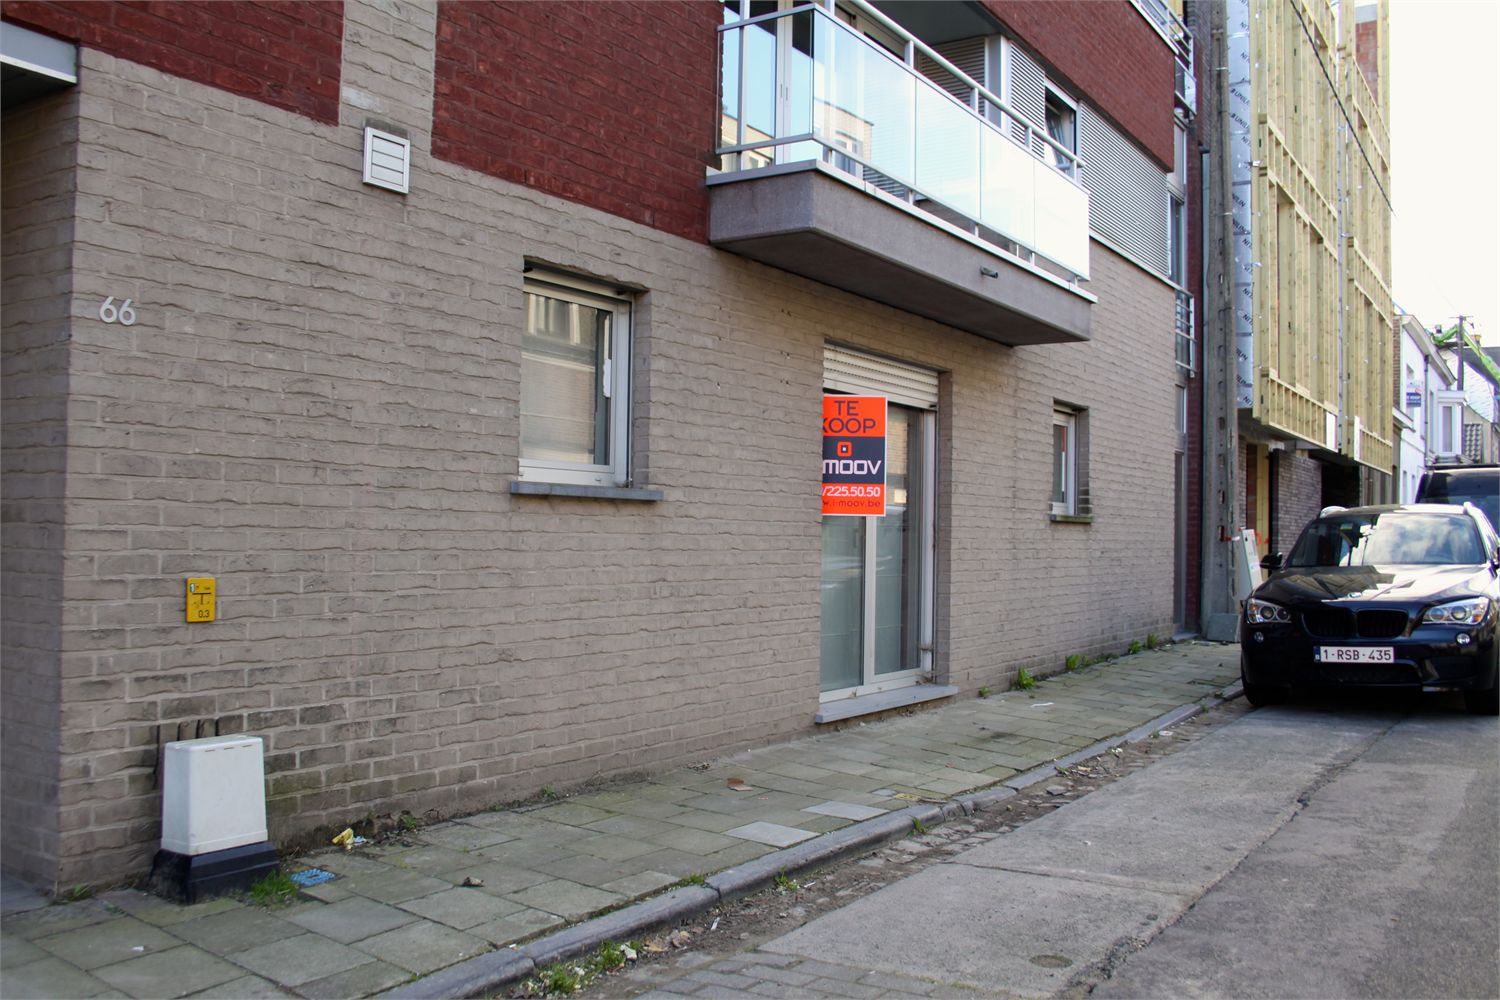 Appartement verkocht in Maldegem